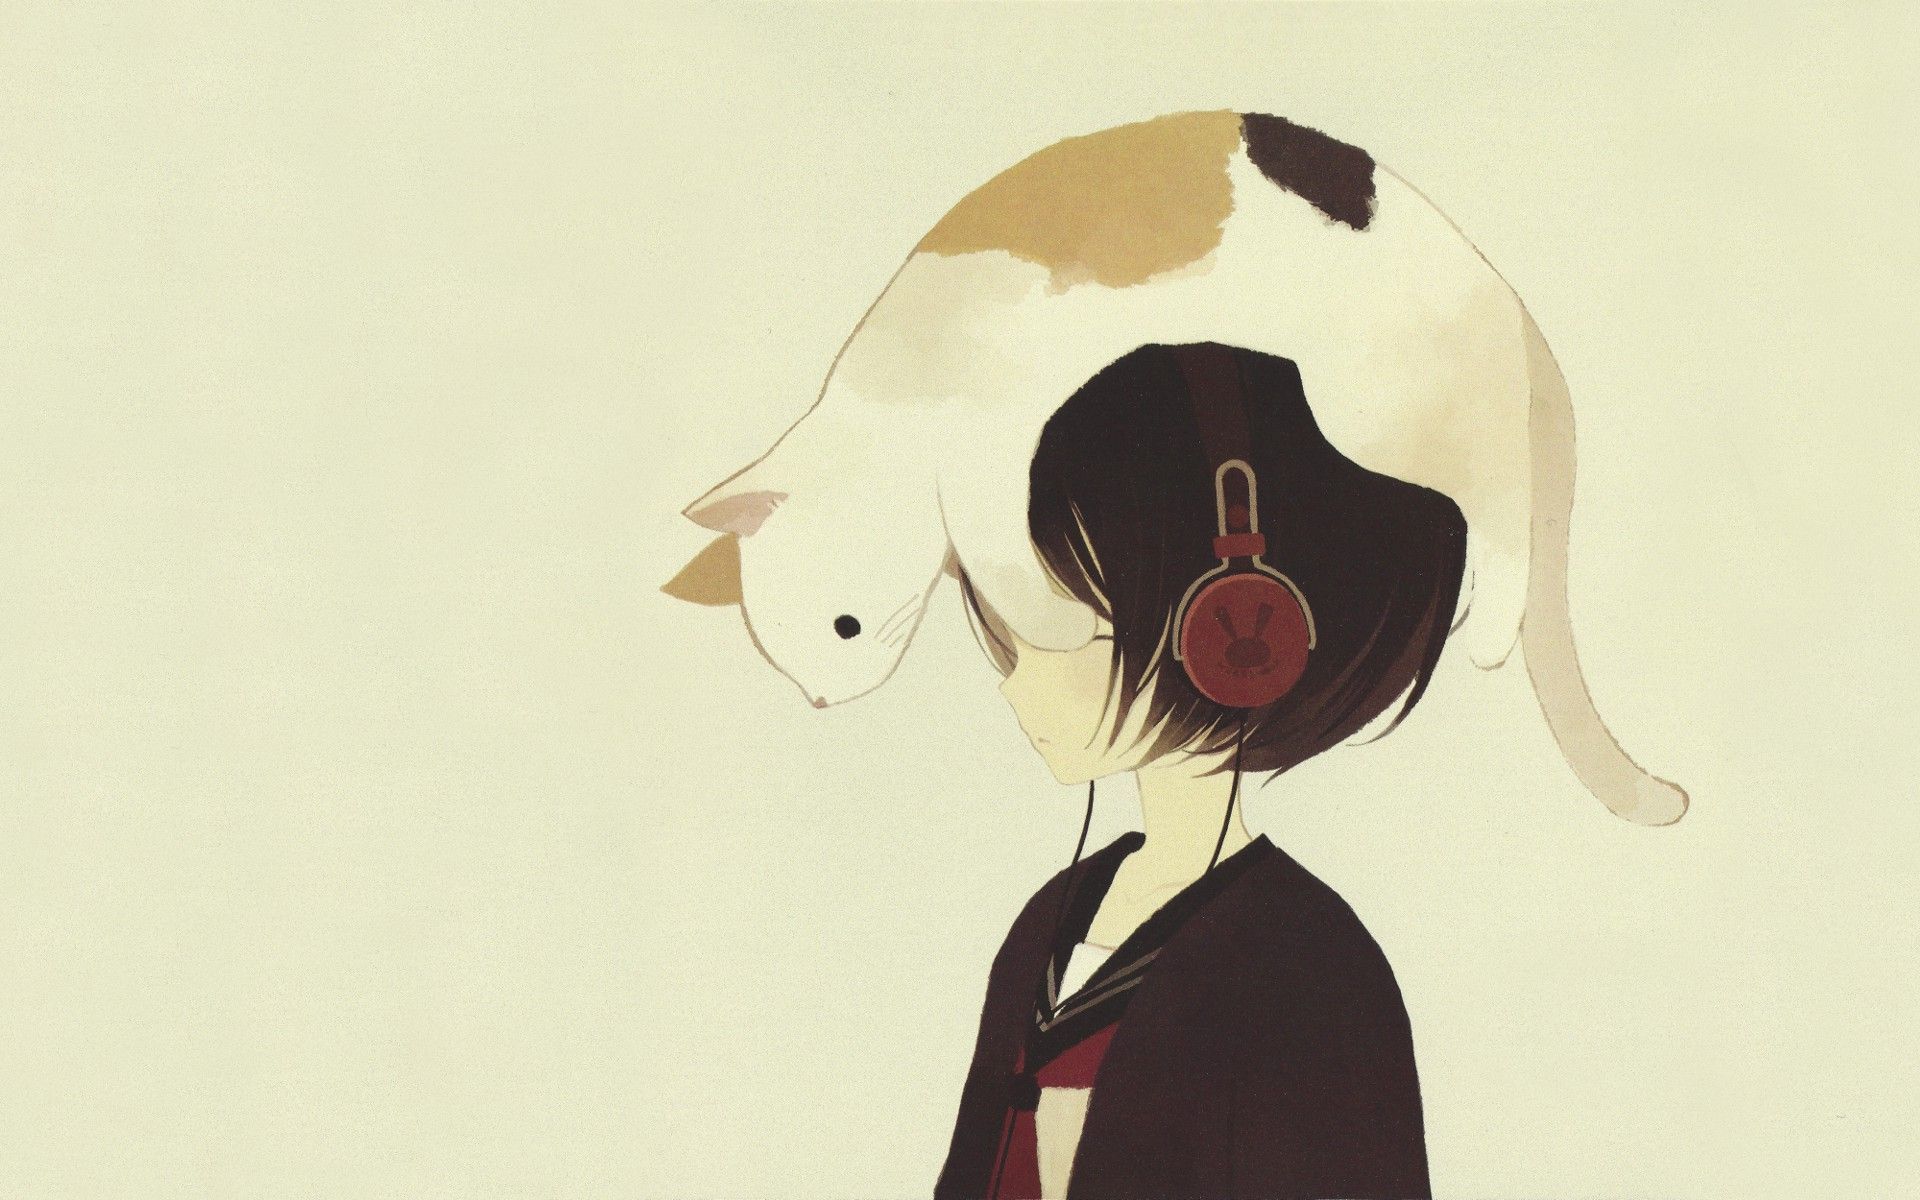 Anime Girls With Headphones Wallpaper | 1920x1200 | ID:19520